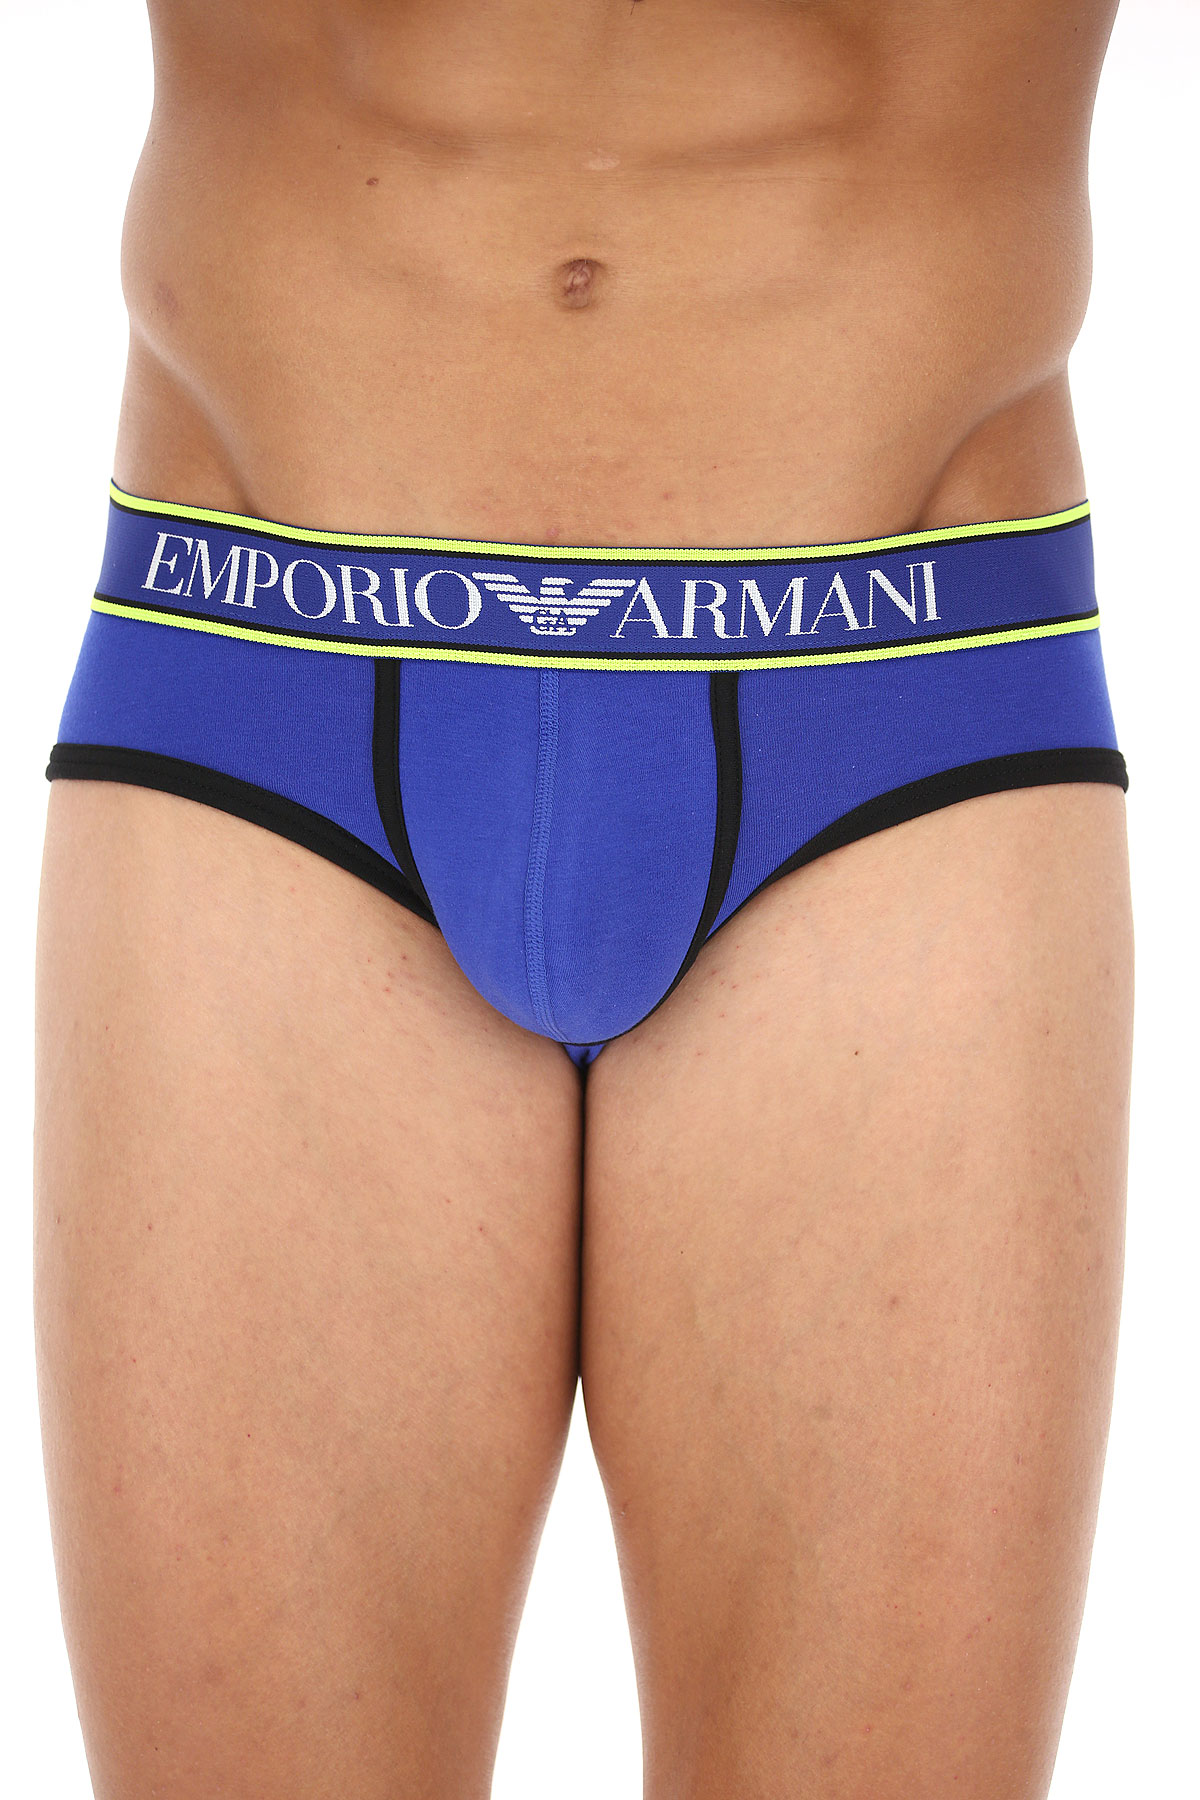 Mens Underwear Emporio Armani Style Code 111592 7a519 10233